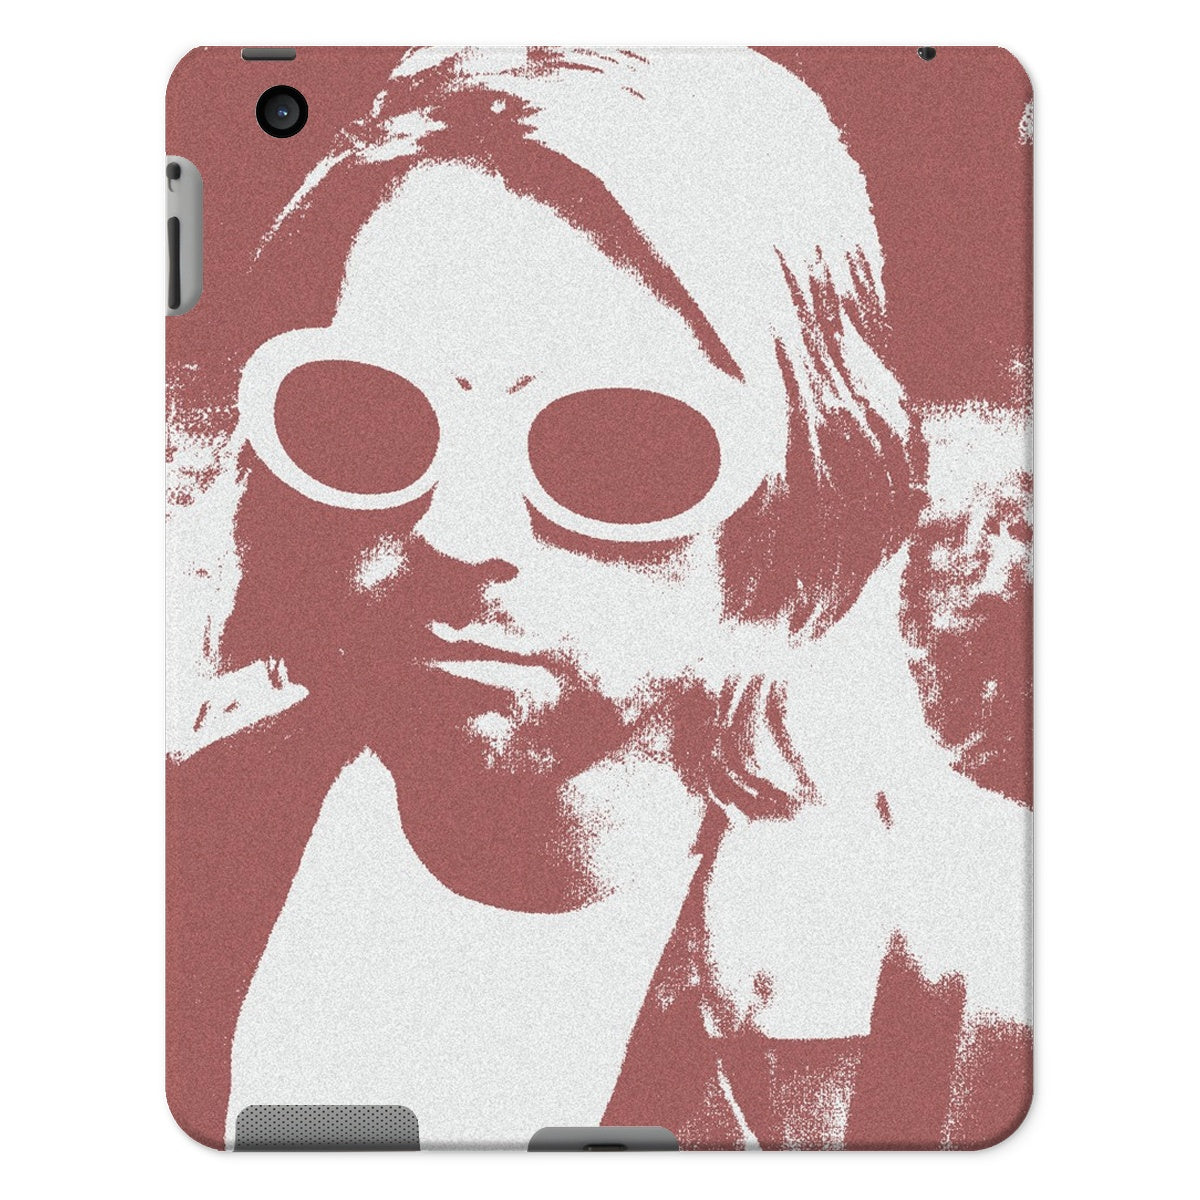 Kurt Cobain Print Tablet Cases